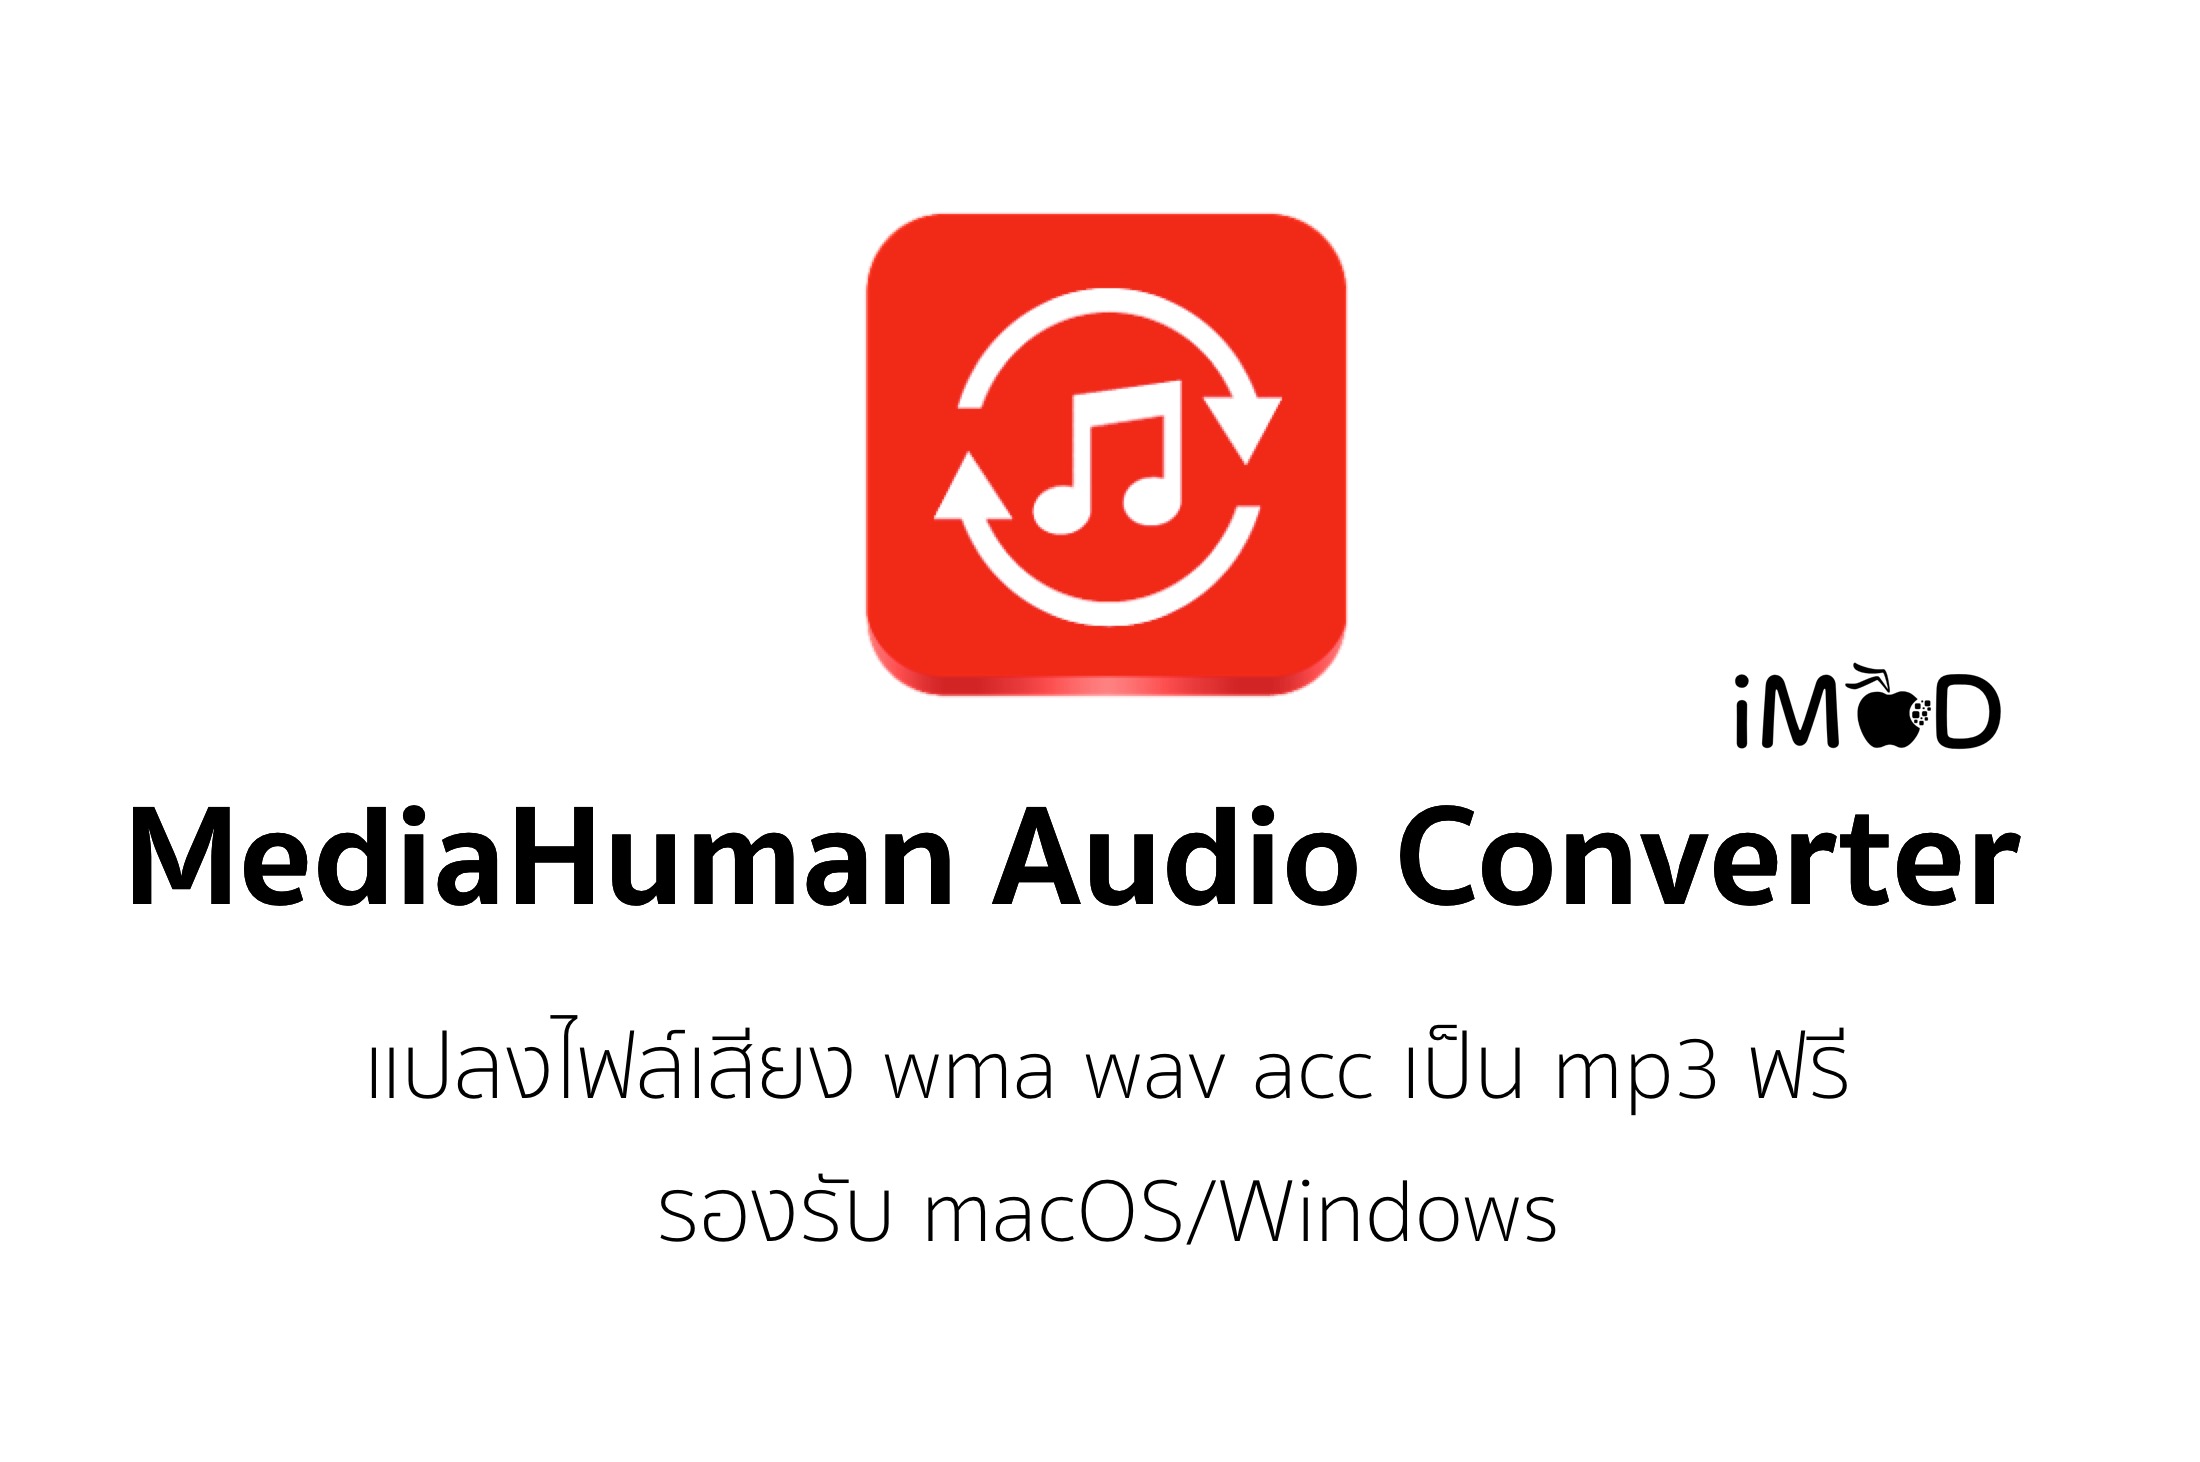 mediahuman audio converter crashes